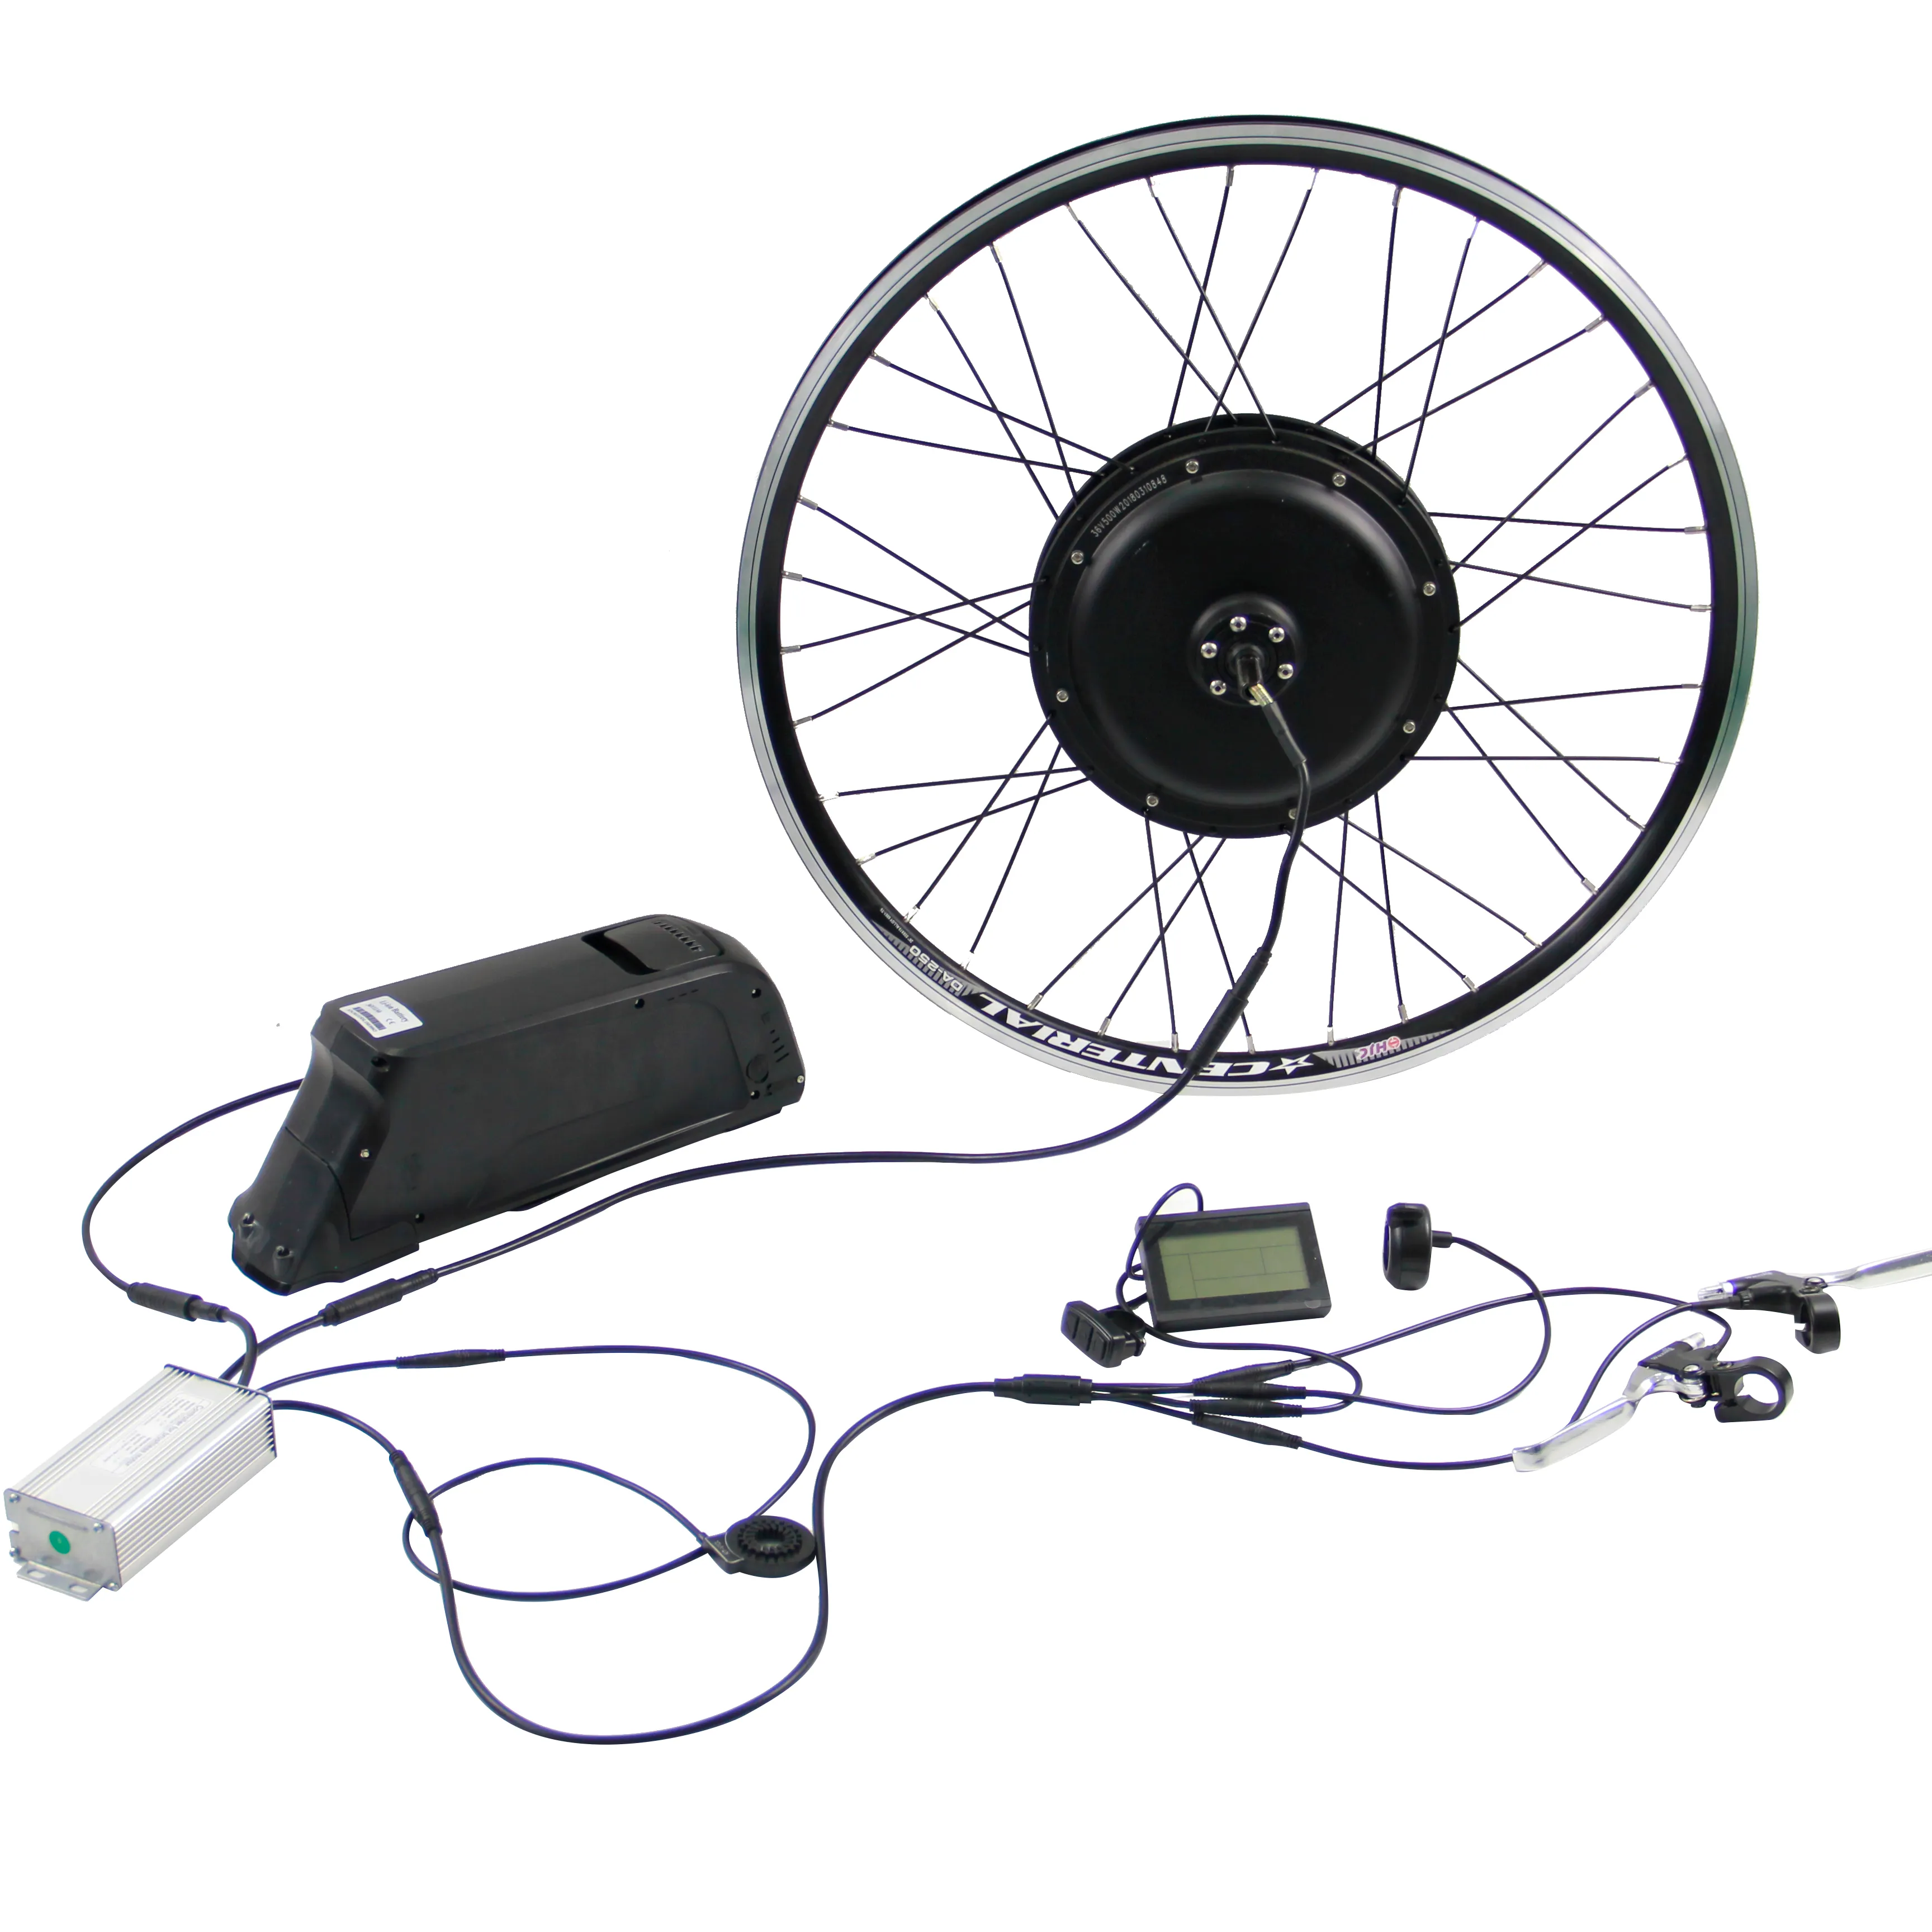 36v 350w 500w motor bike kit, elektrische hub motor kit für fahrrad, kassette hub motor ebike conversion kit